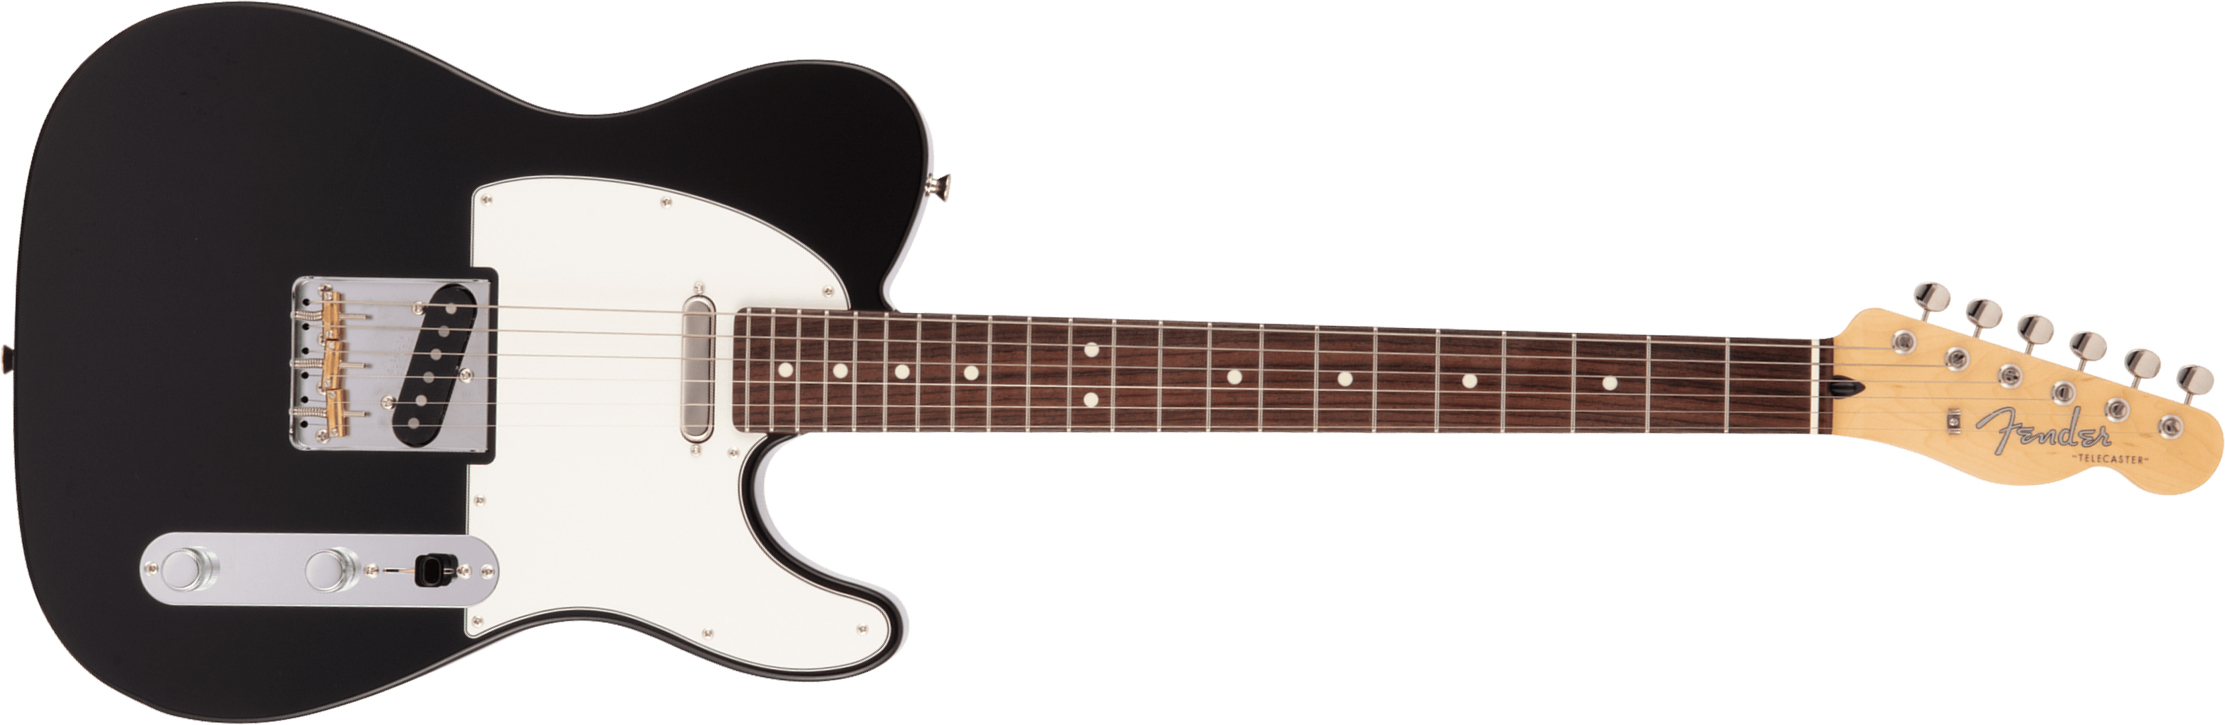 Fender Tele Hybrid Ii Jap 2s Ht Mn - Black - Tel shape electric guitar - Main picture